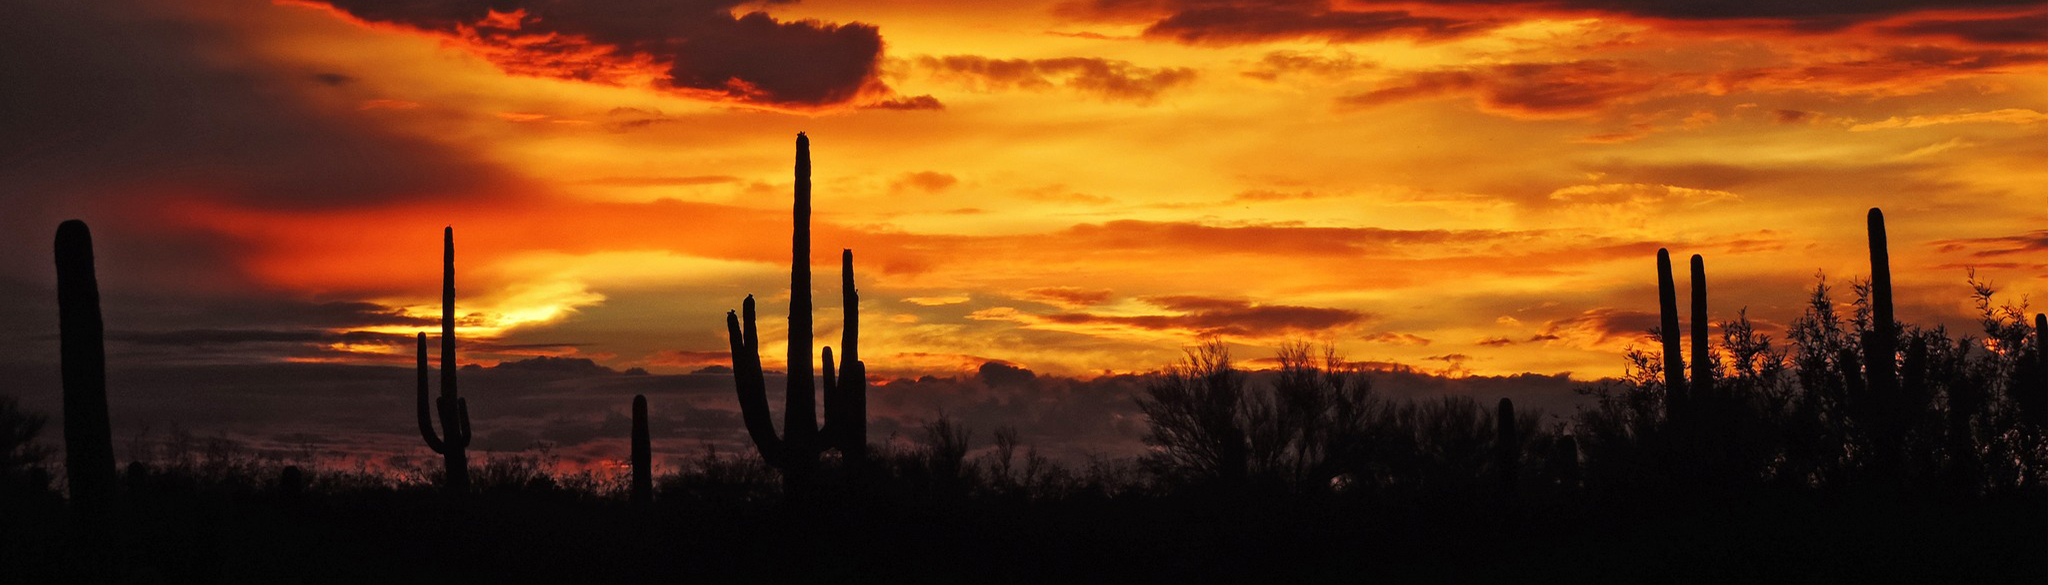 Saguaro cacti silhouetted against orange sunset.